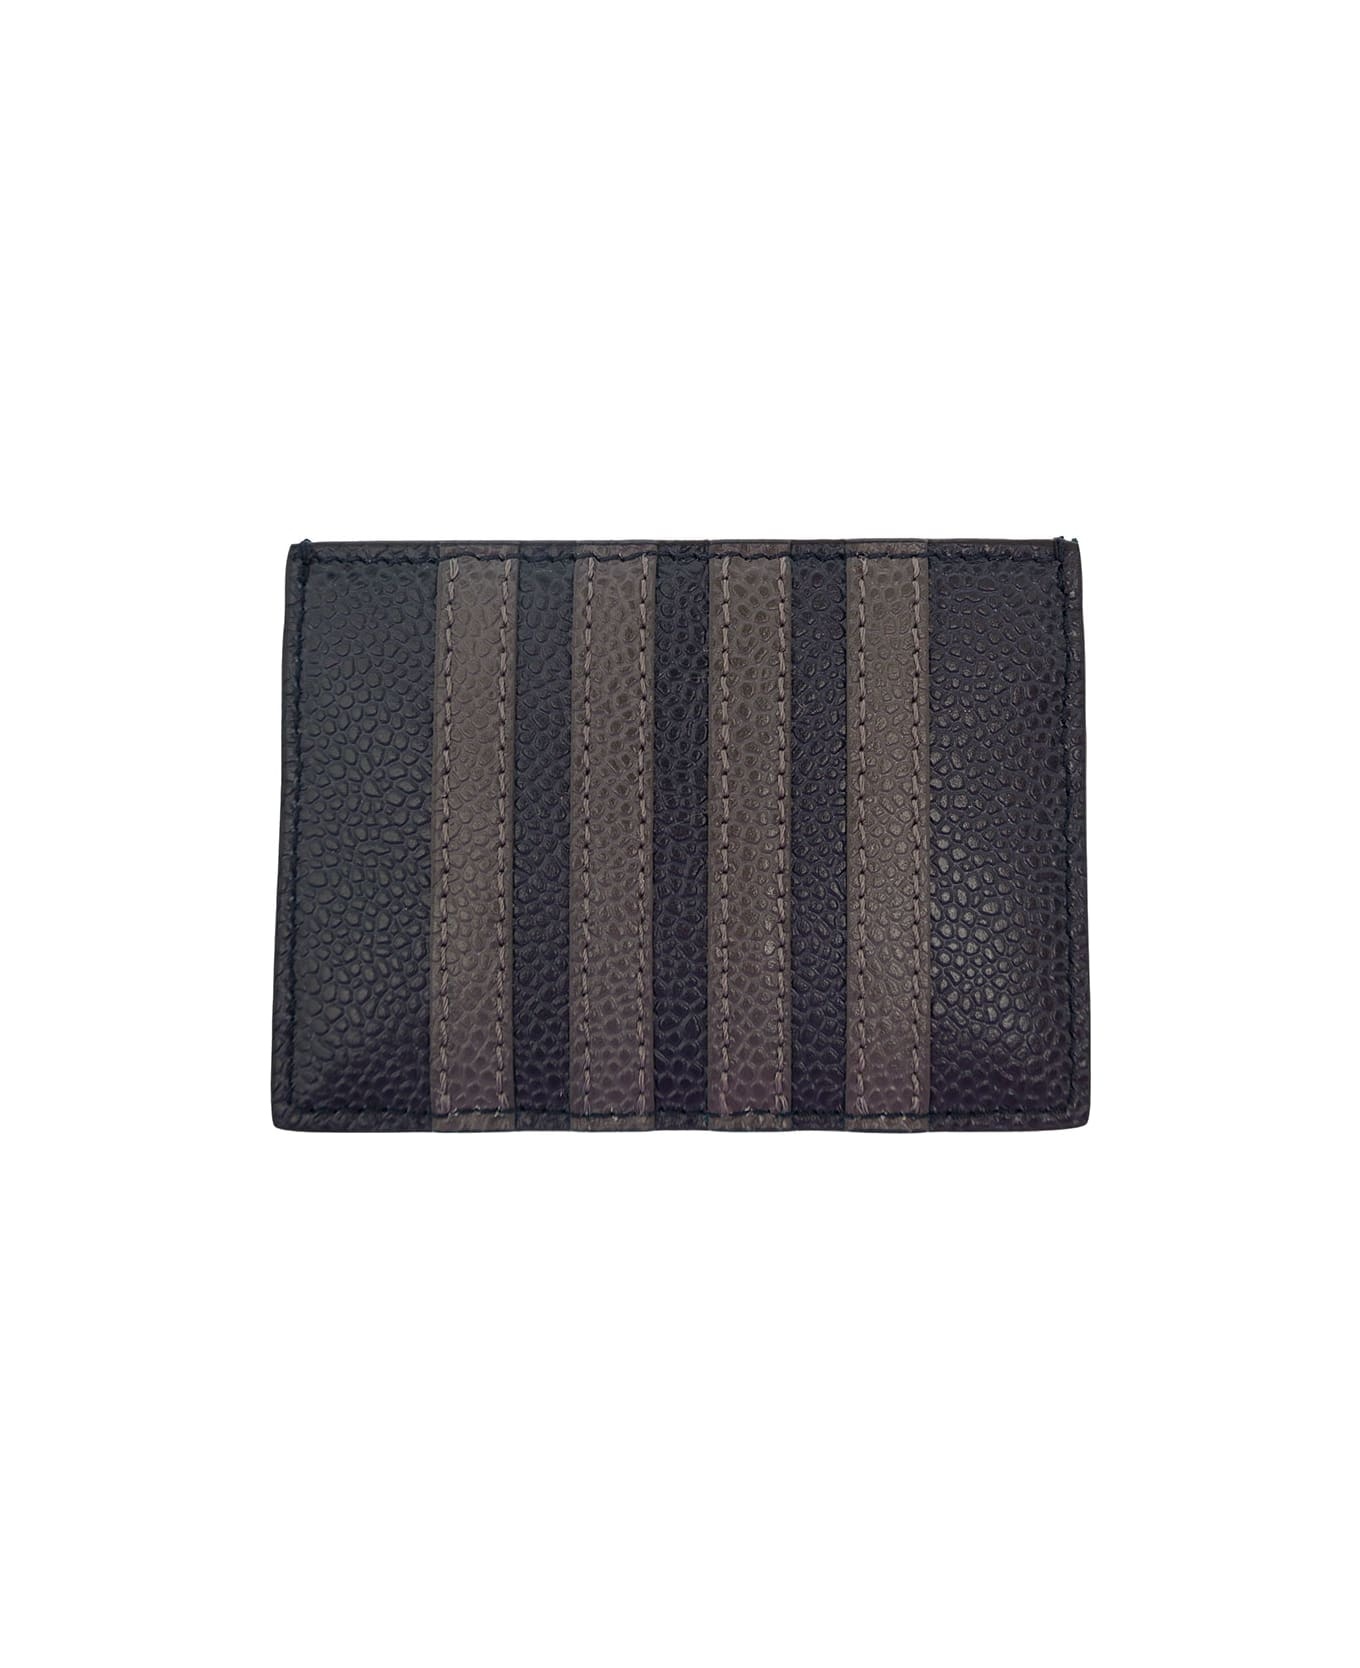 Single Card Holder W/ 4 Bar Applique Stripe In Pebble Grain Leather - 2